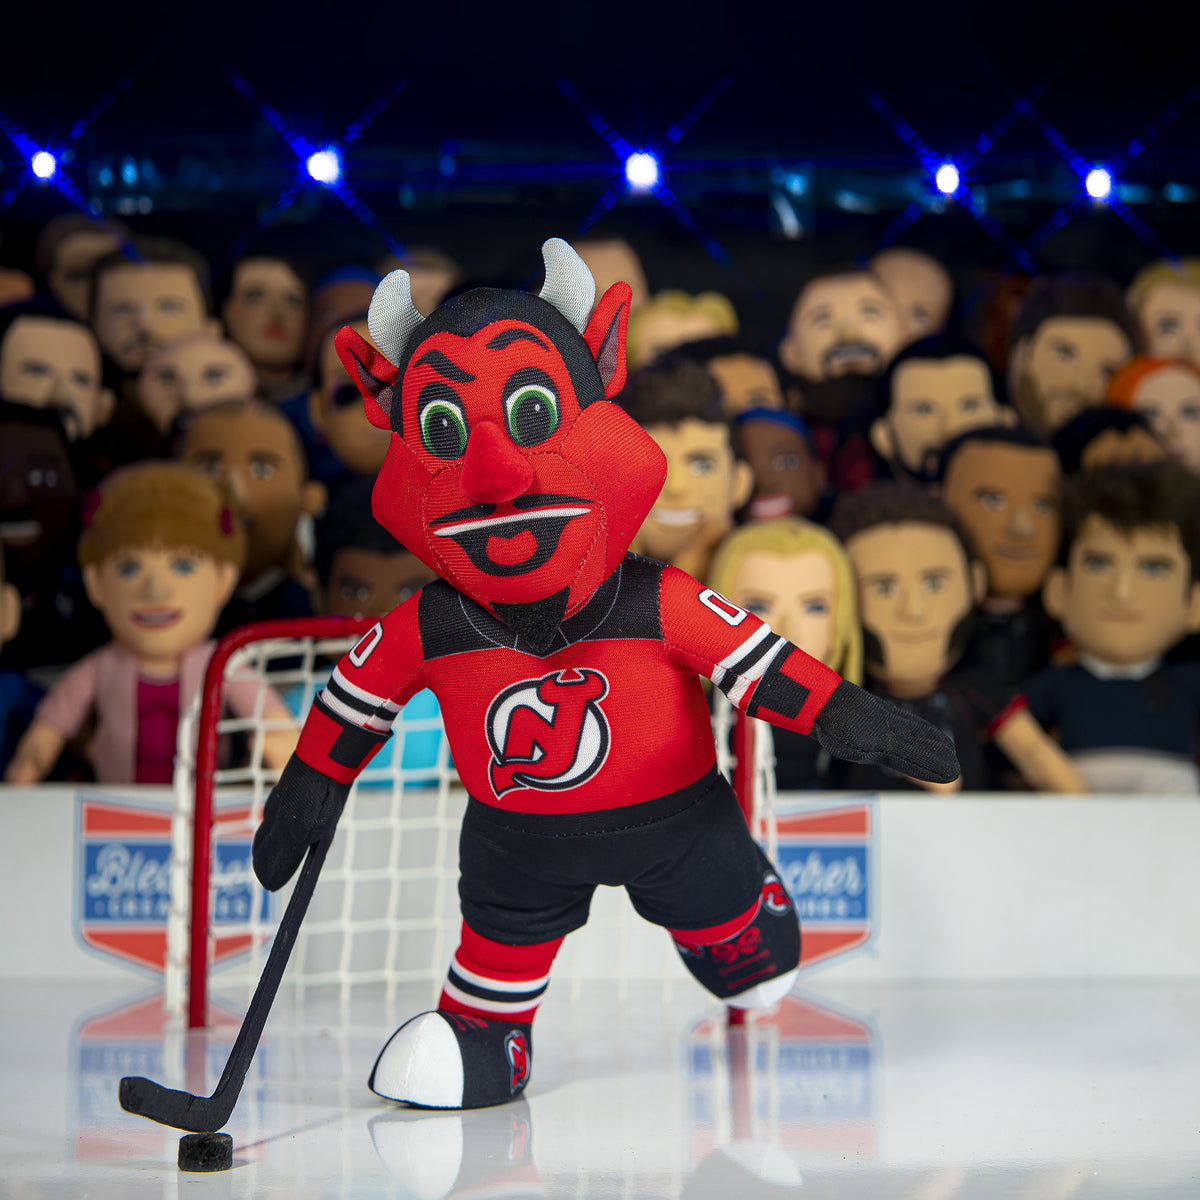 New Jersey Devils N.J. Devil 10&quot; Mascot Plush Figure